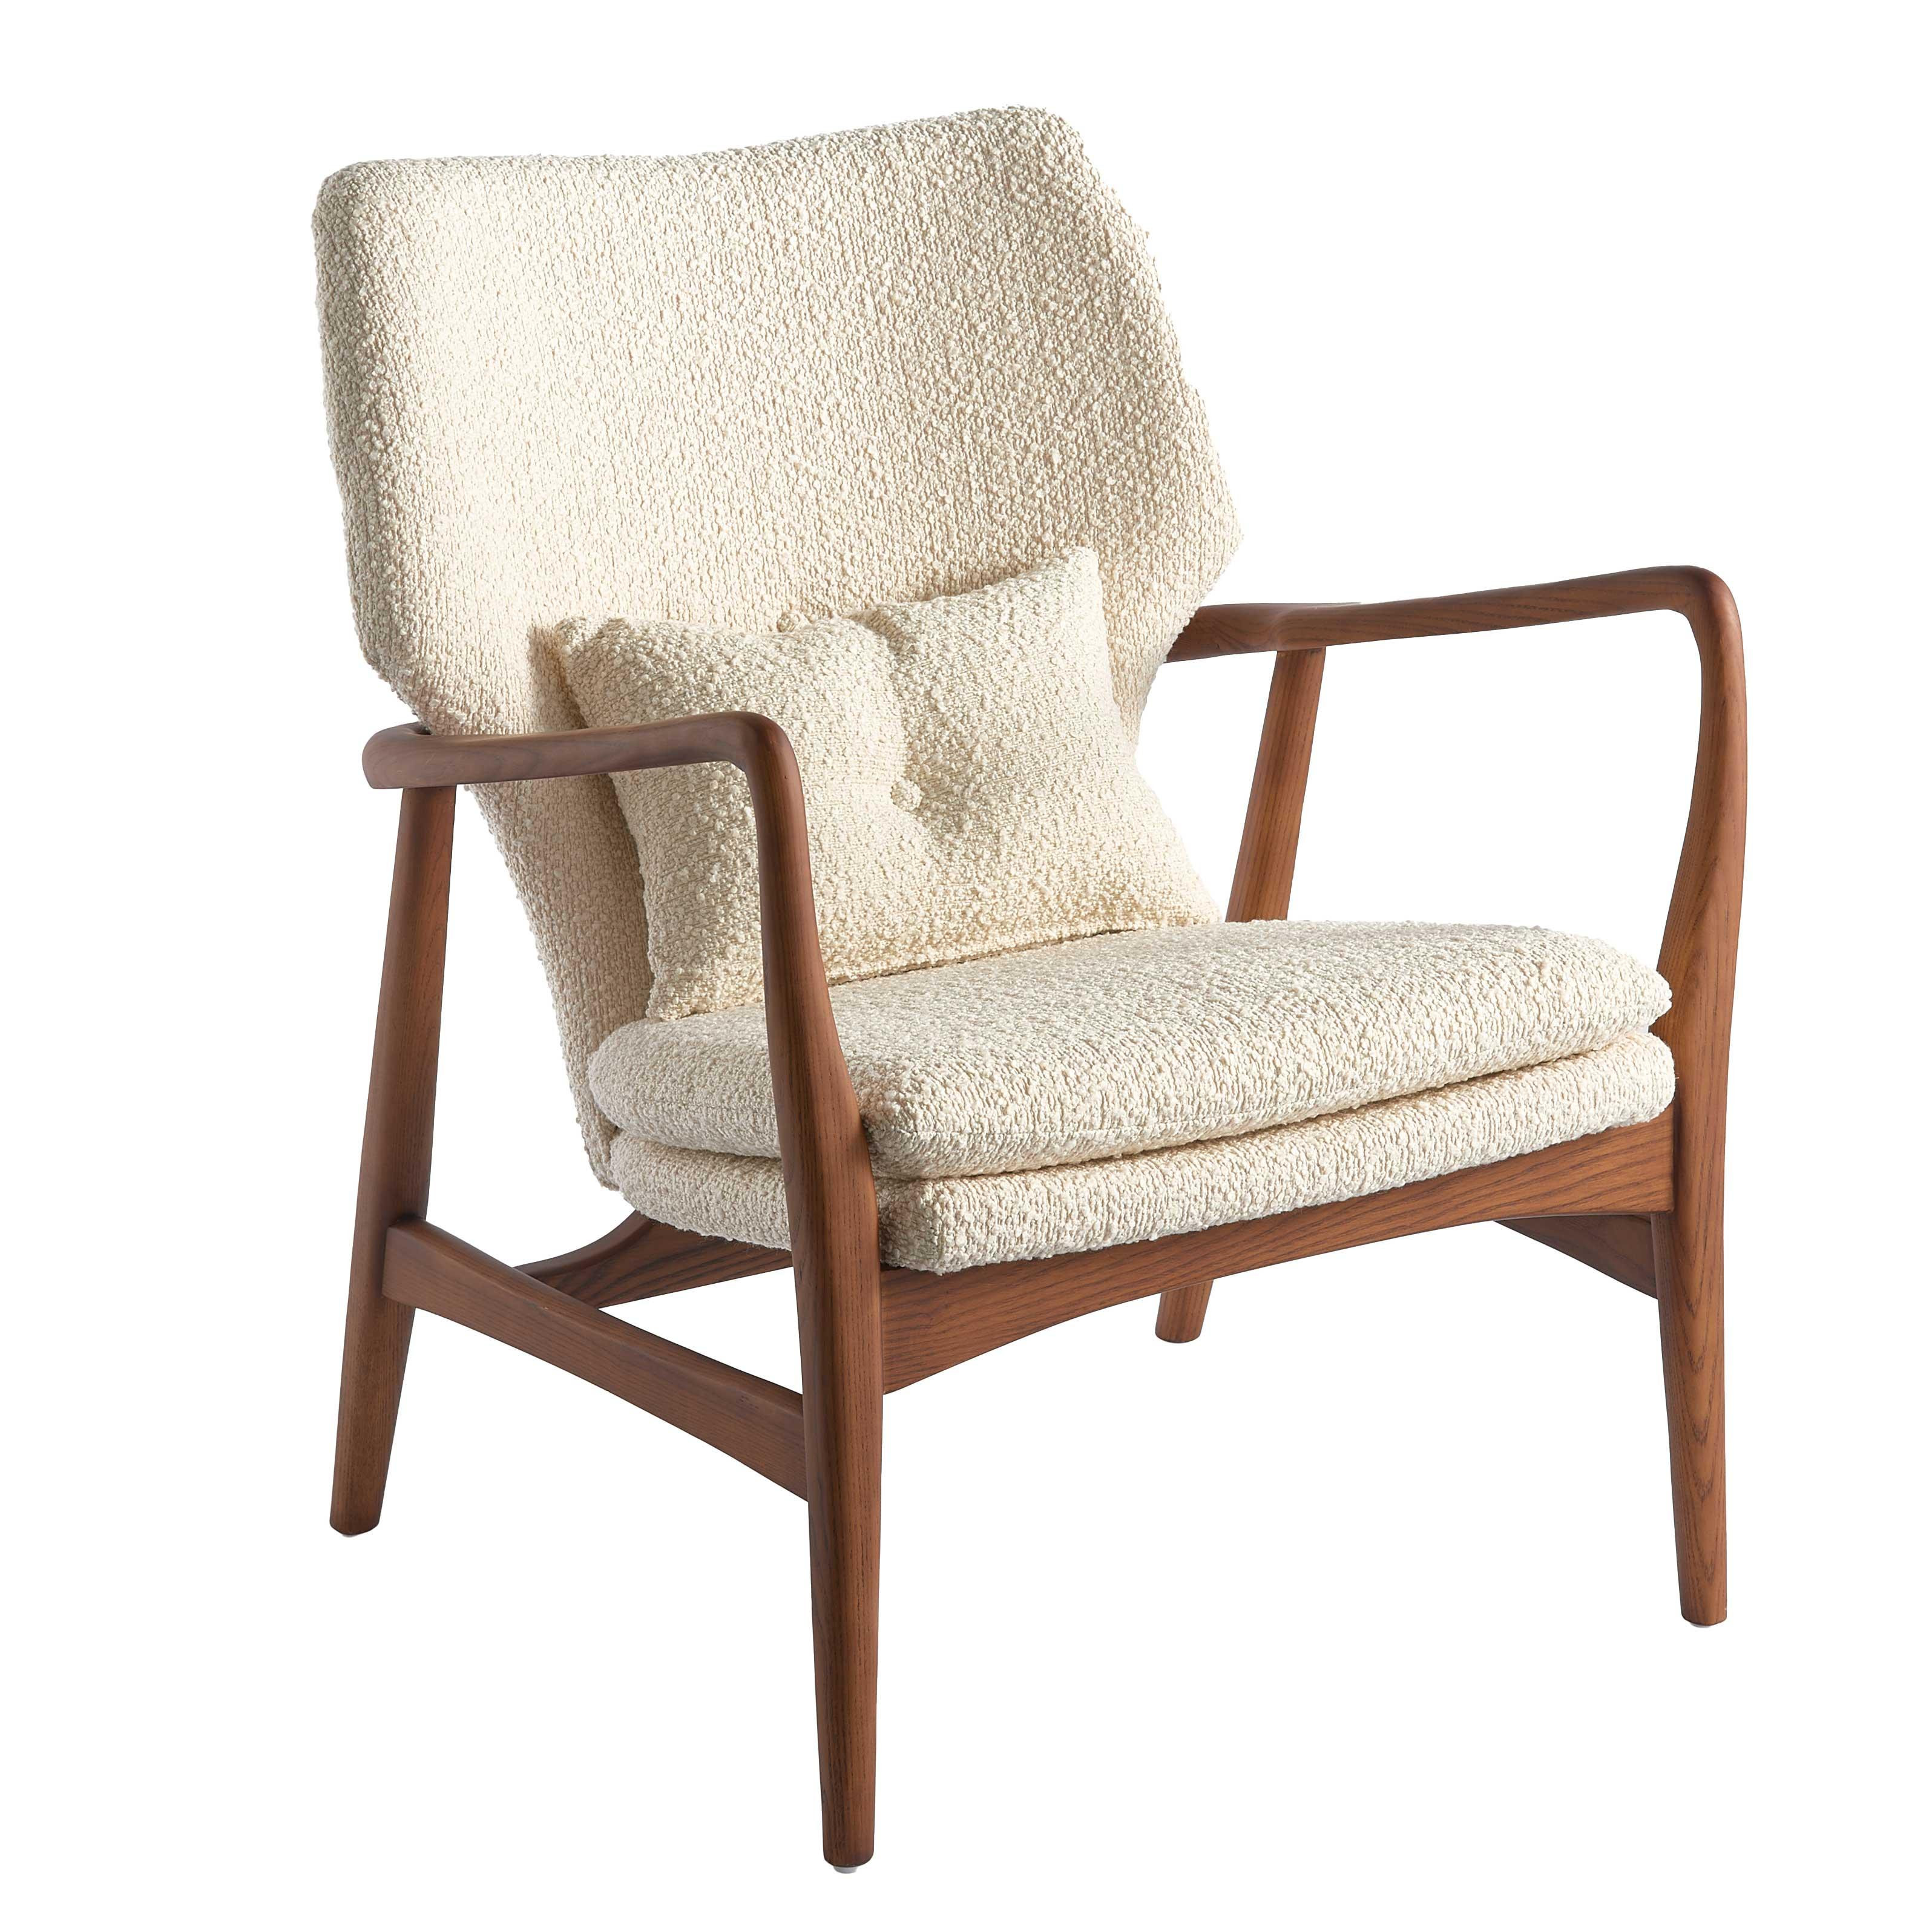 POLSPOTTEN Chair Peggy fauteuil stoel limited edition boucle ecru | Flinders